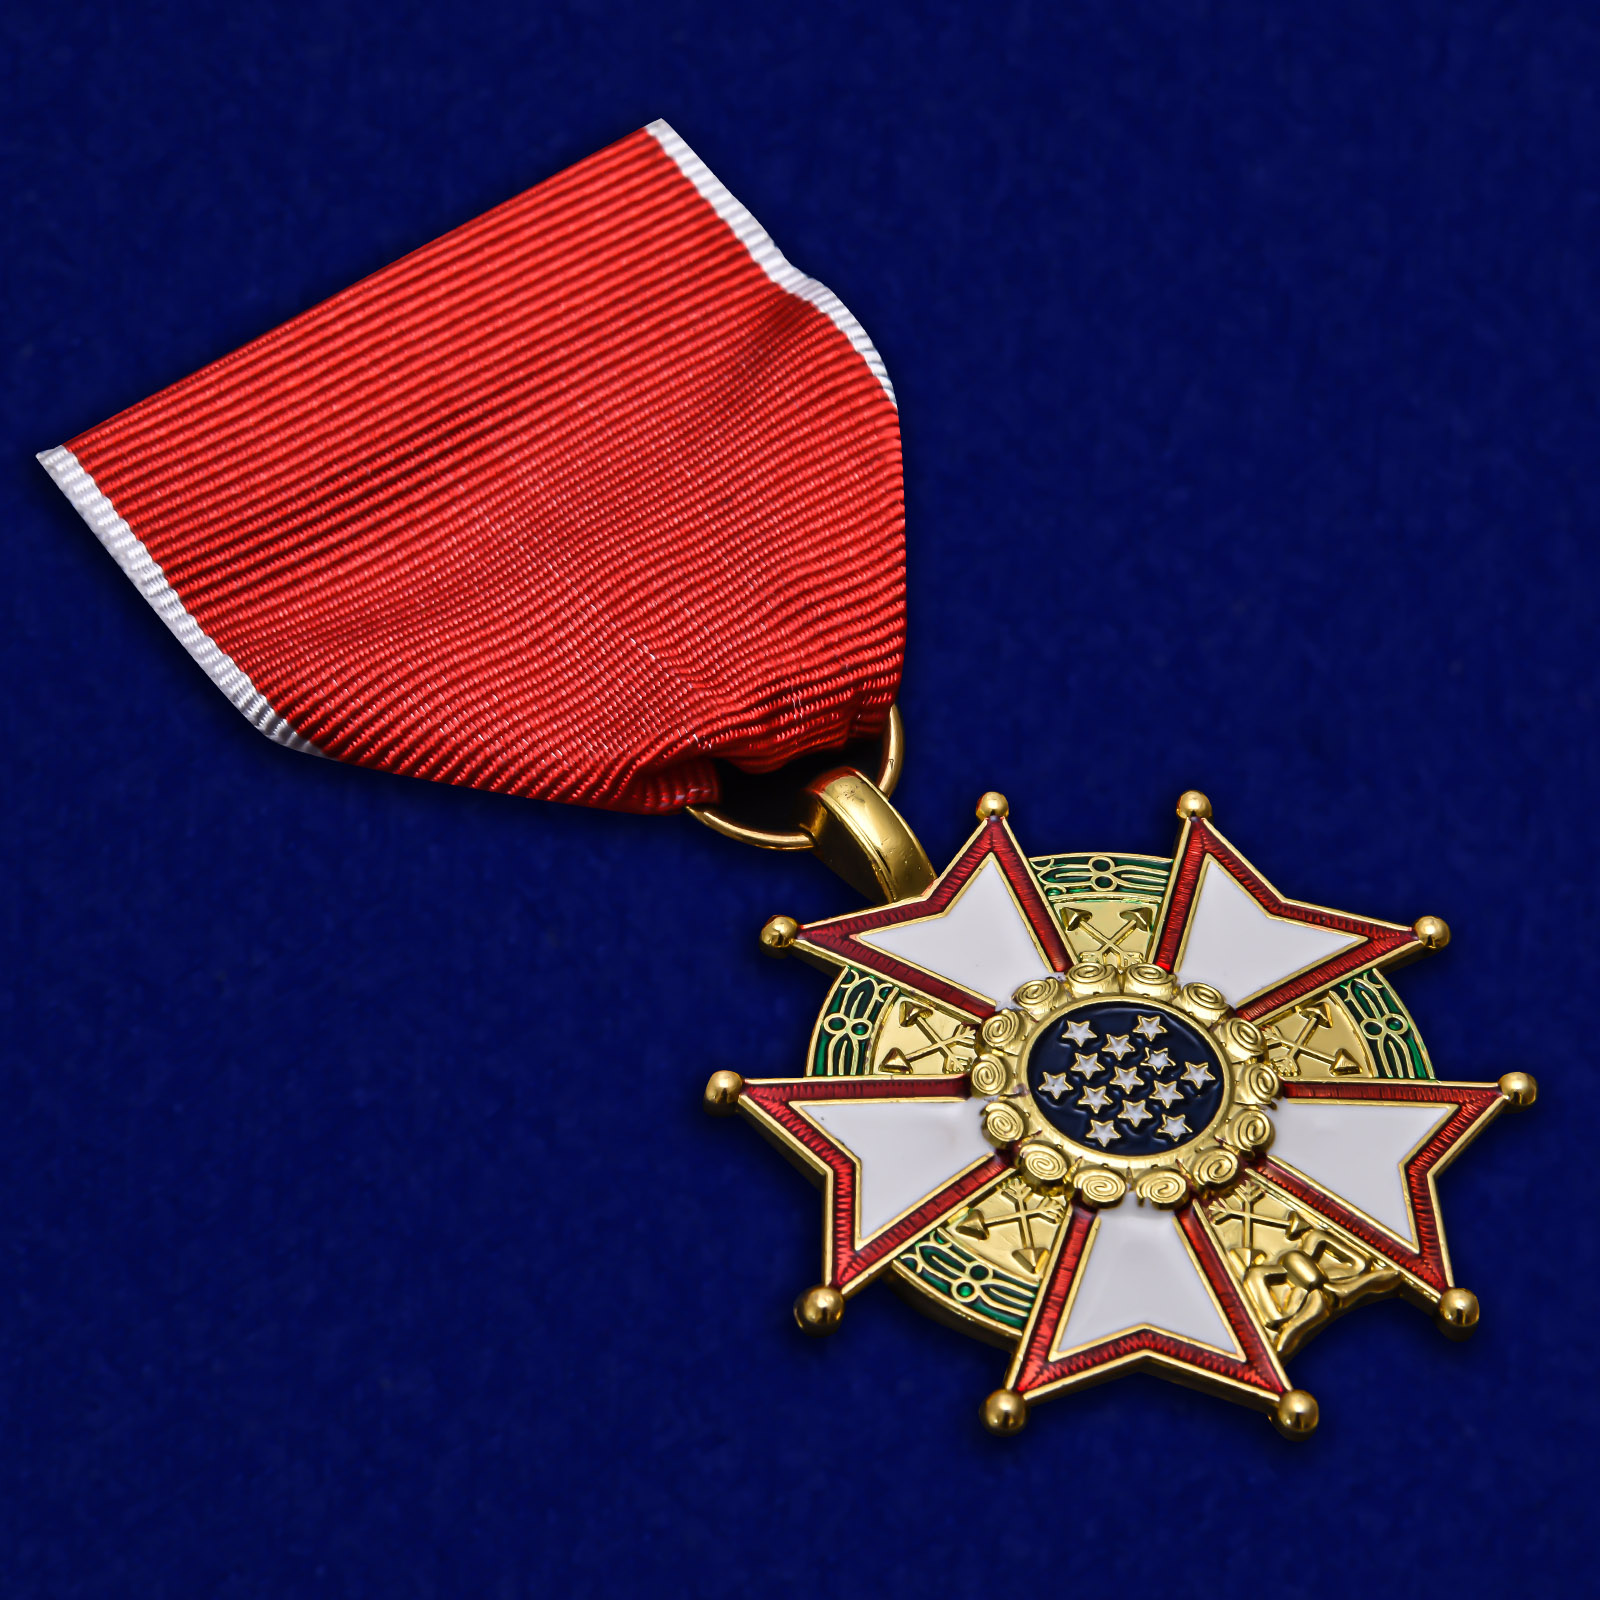 Орден "Легион Почета" США - (для легионеров)